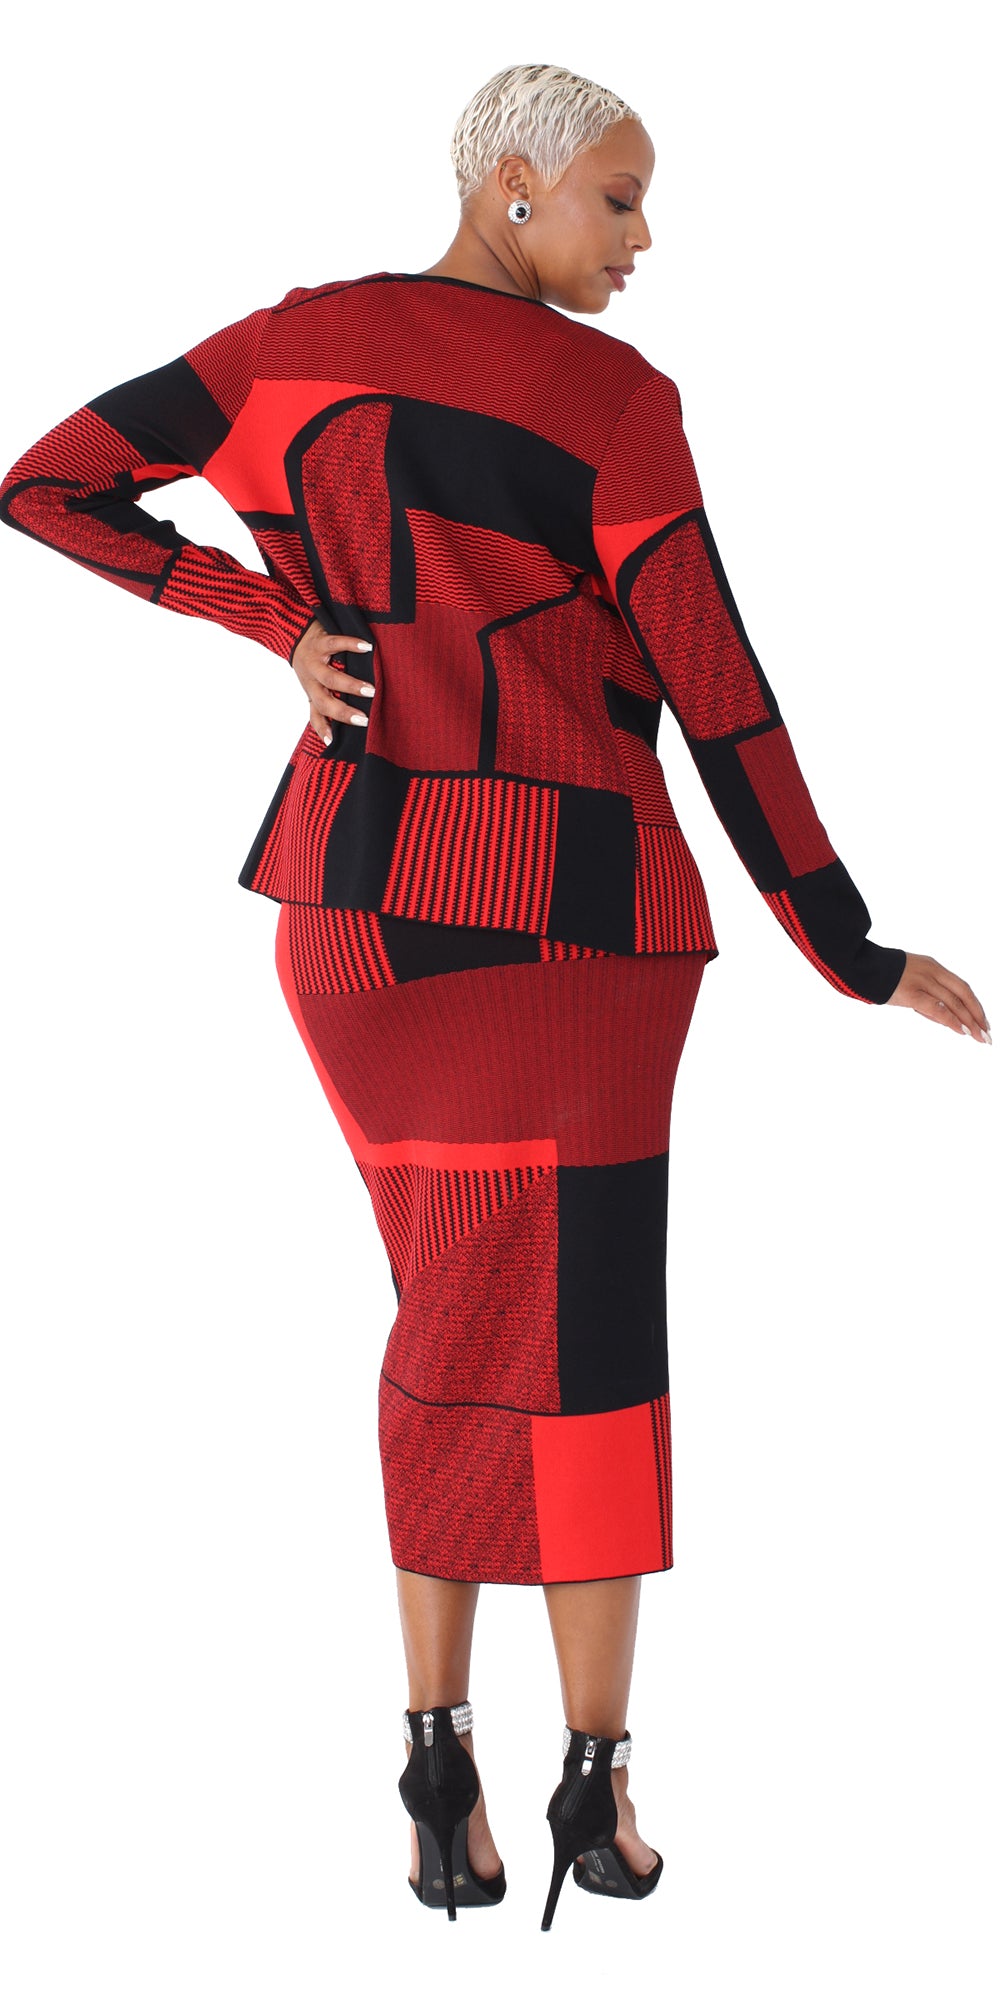 Kayla 5309 - Red Black - 3 PC Knit Jacket, Cami and Skirt Set